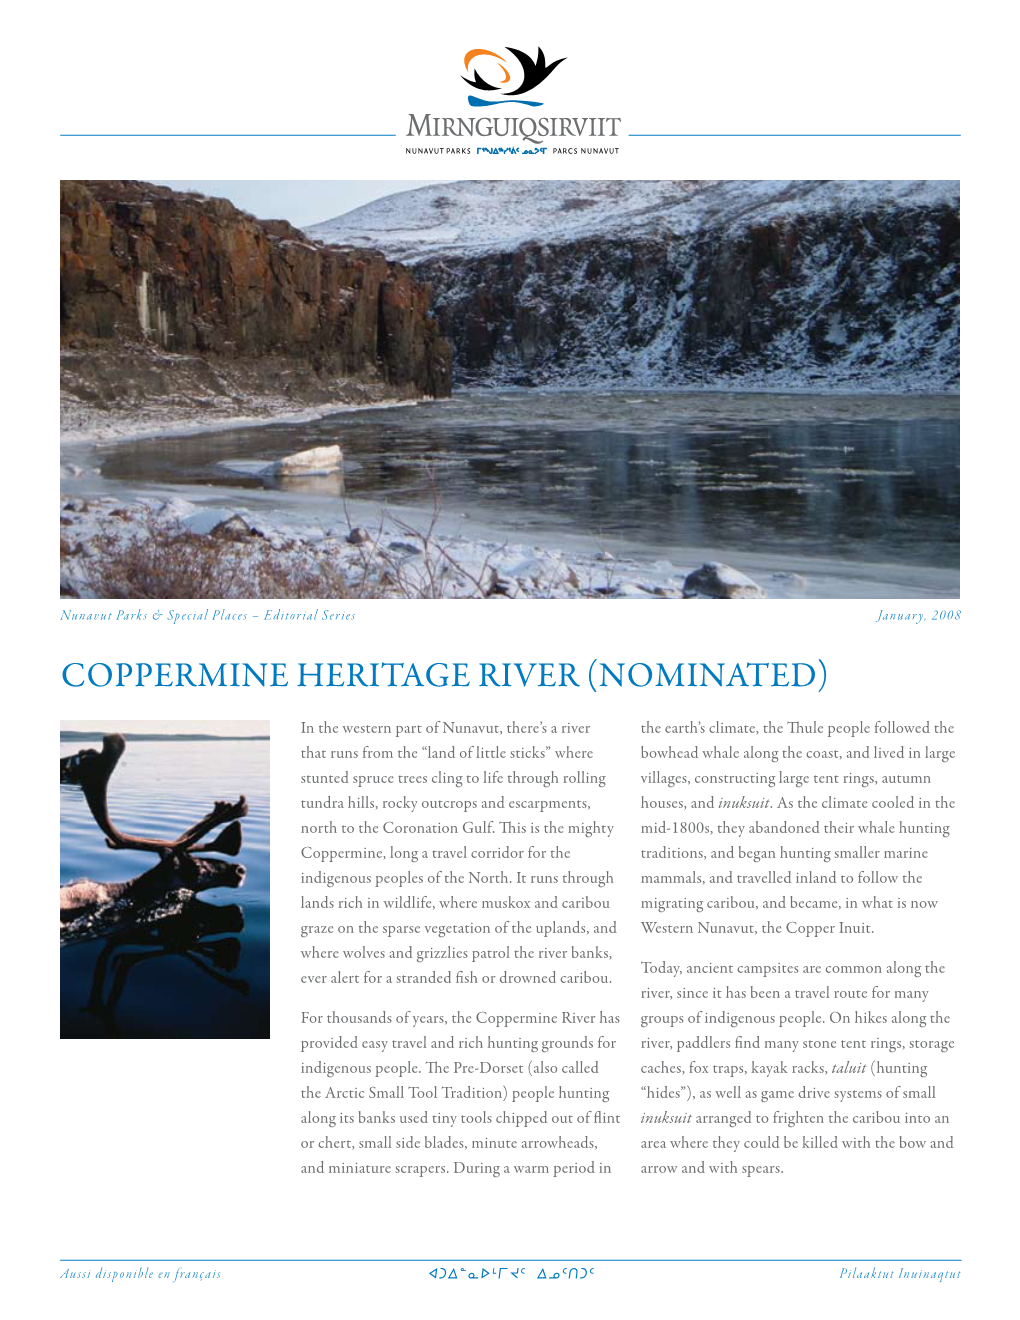 Coppermine Heritage River (Nominated)